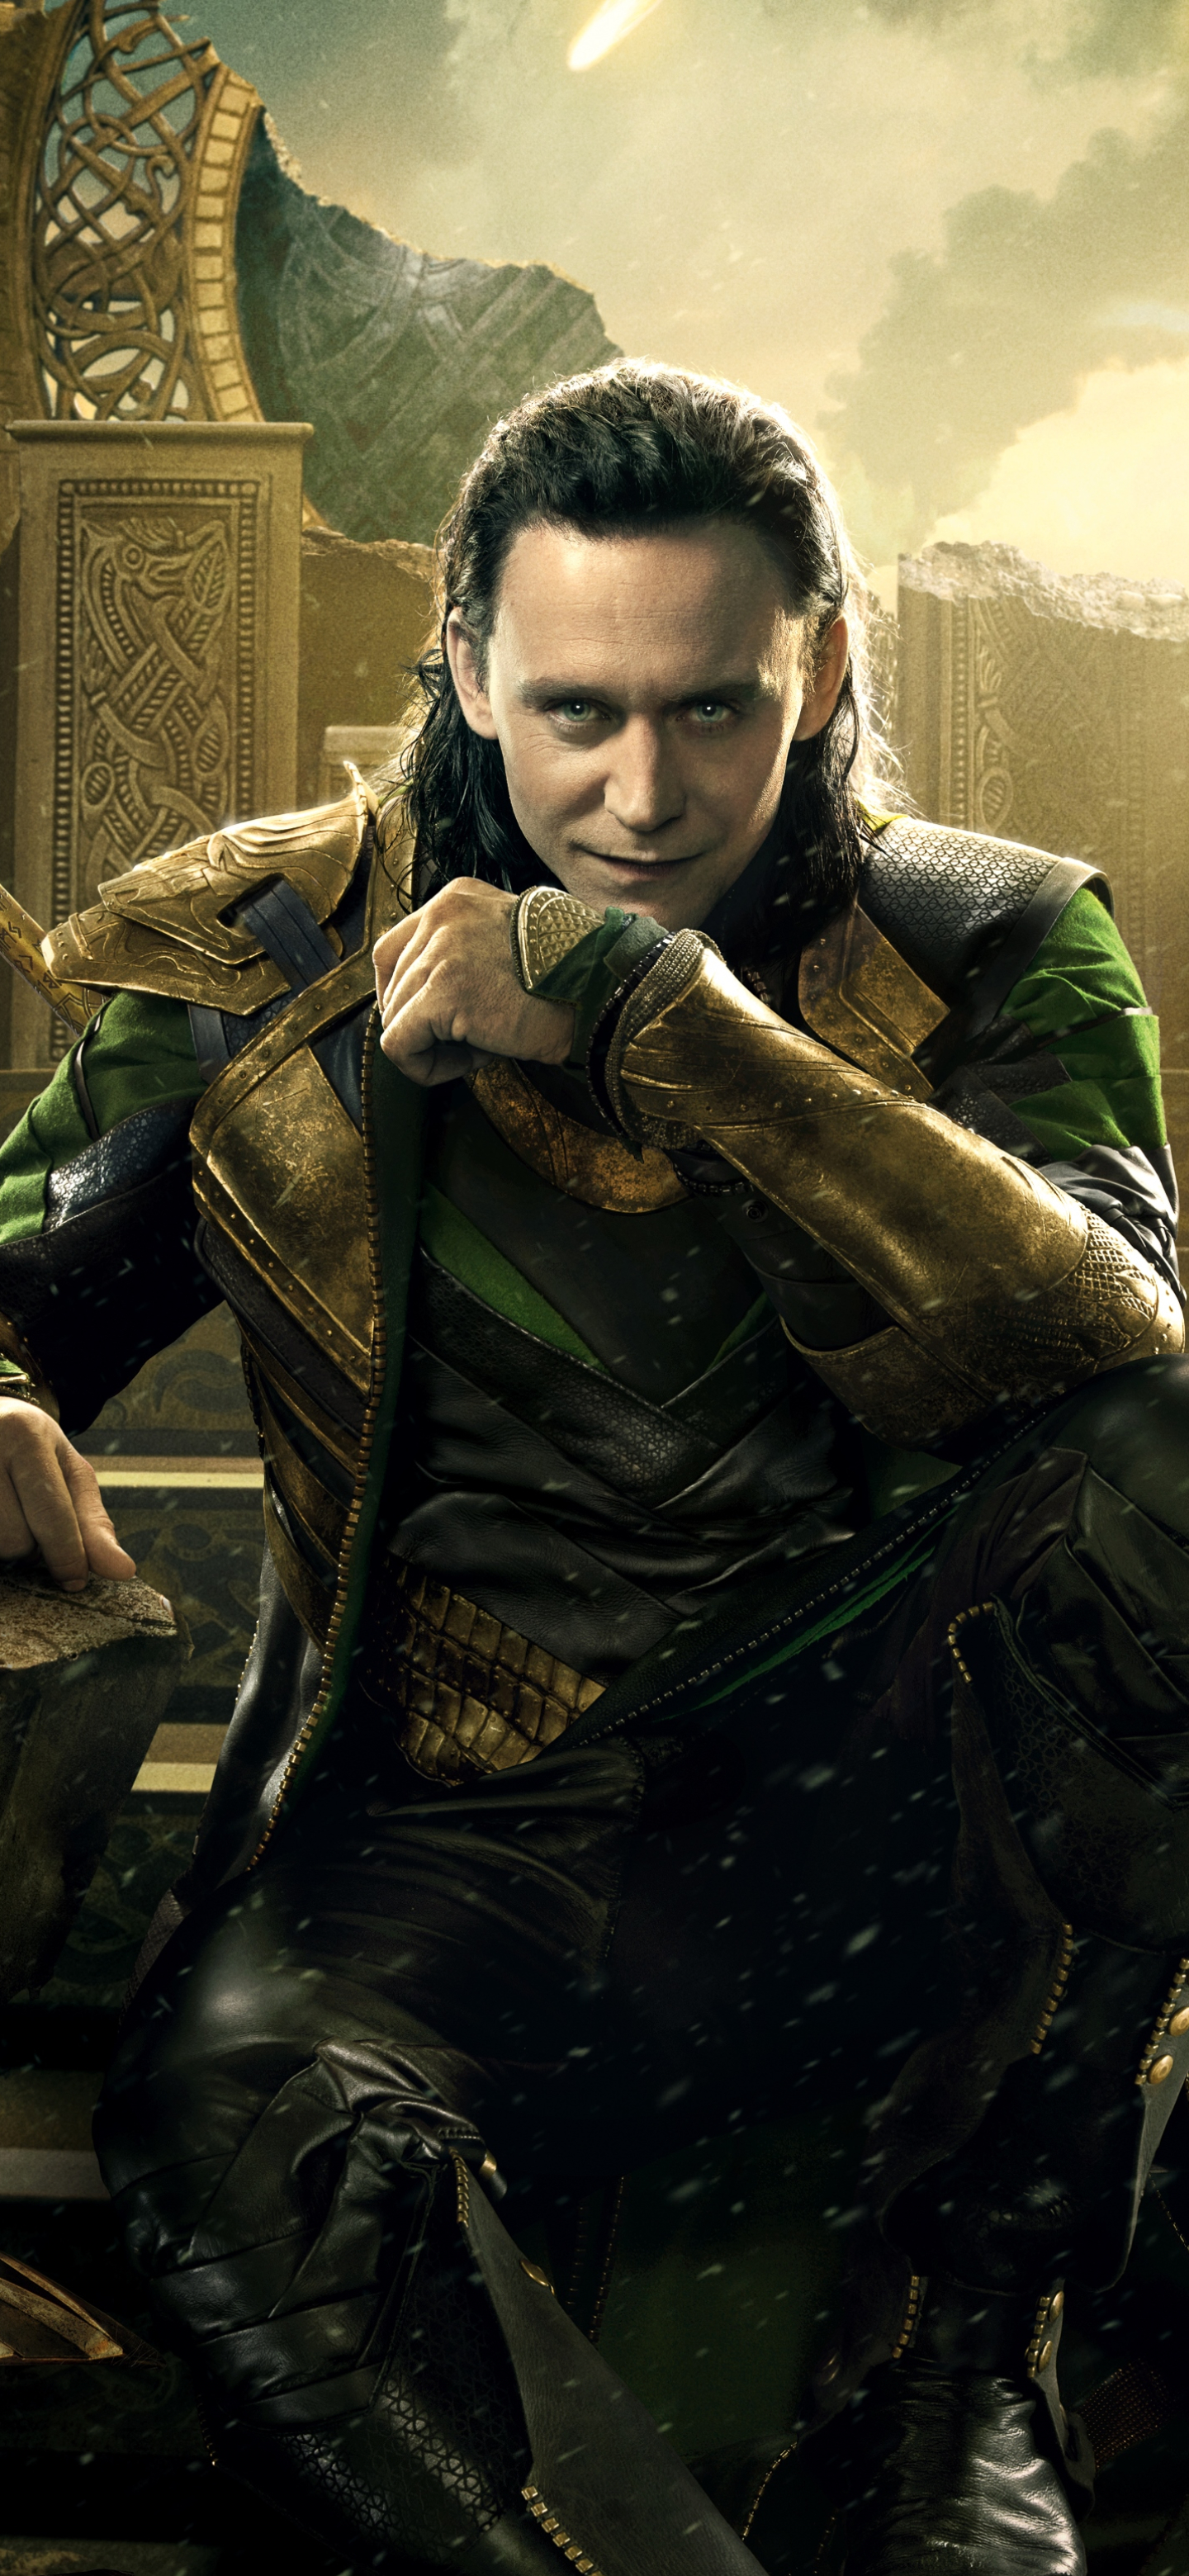 Descarga gratuita de fondo de pantalla para móvil de Películas, Thor, Loki (Marvel Cómics), Tom Hiddleston, Thor: El Mundo Oscuro.